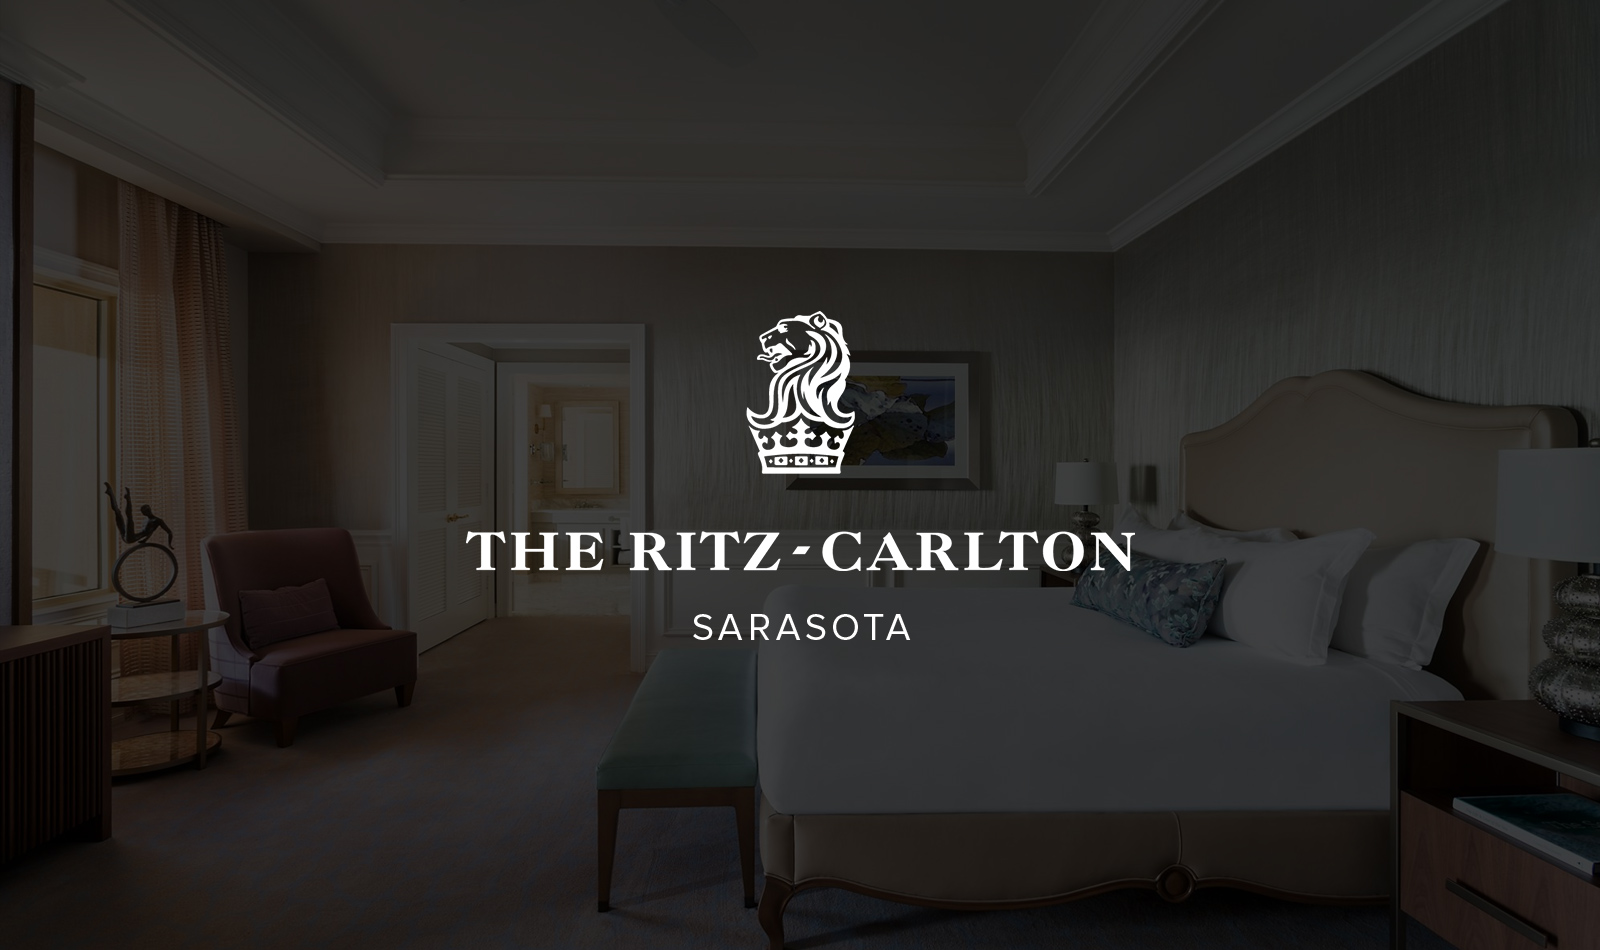 The Ritz-Carlton Members Club